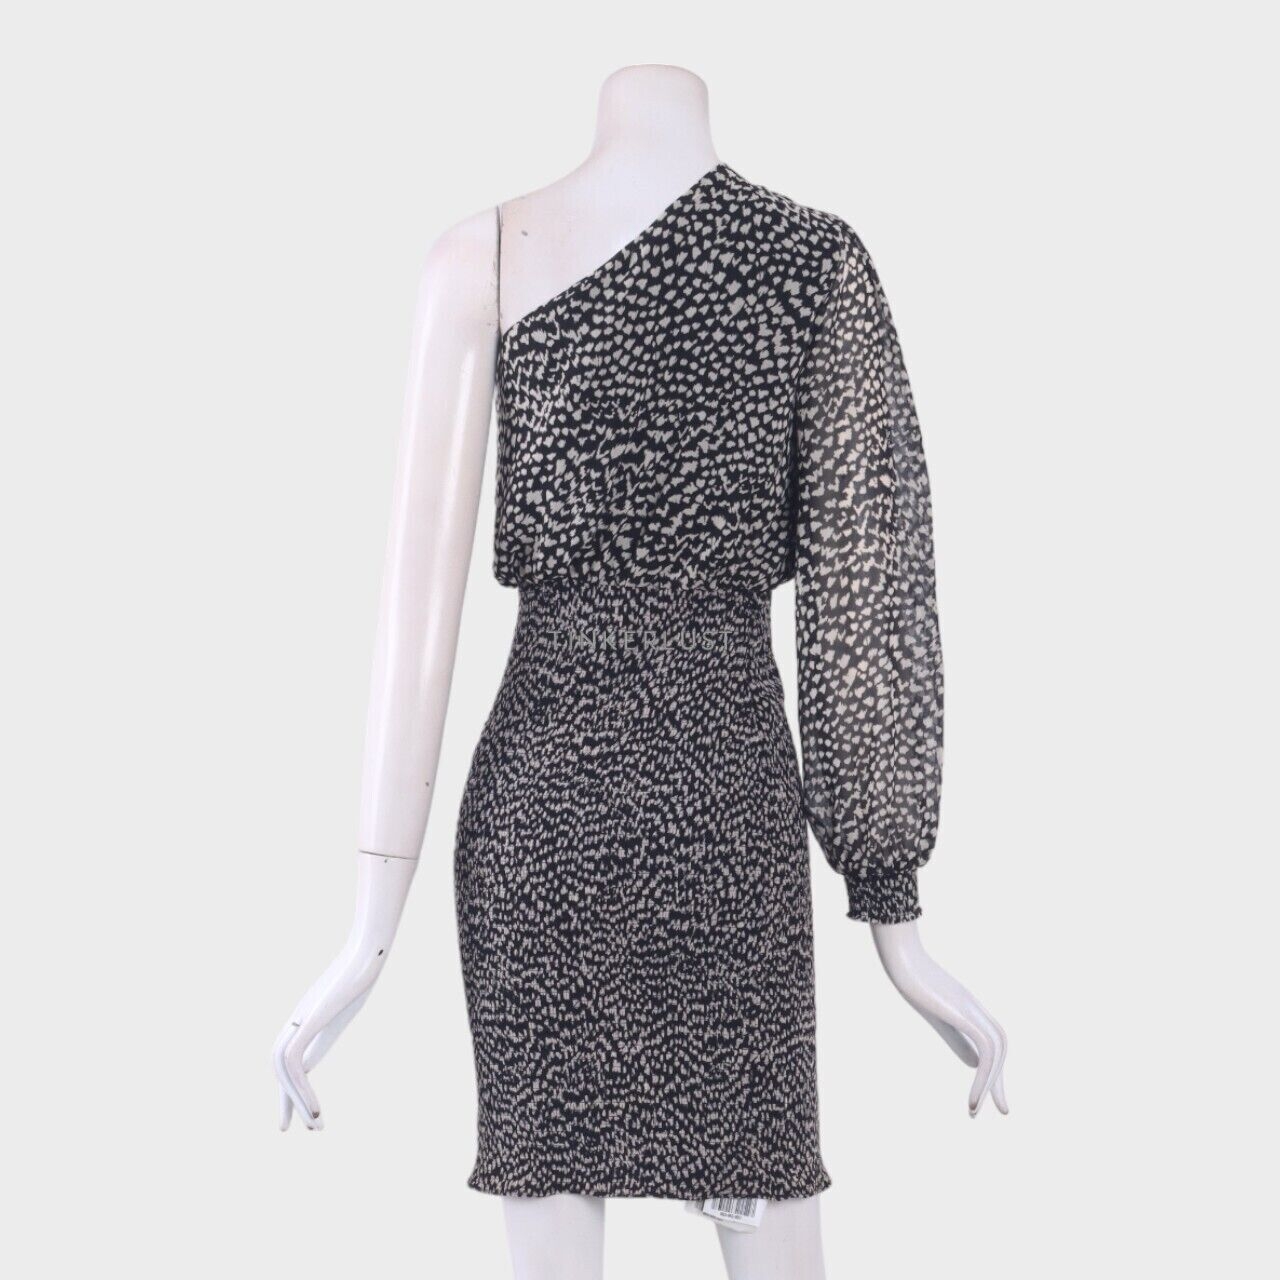 Kookai Black & White Pattern One Shoulder Mini Dress